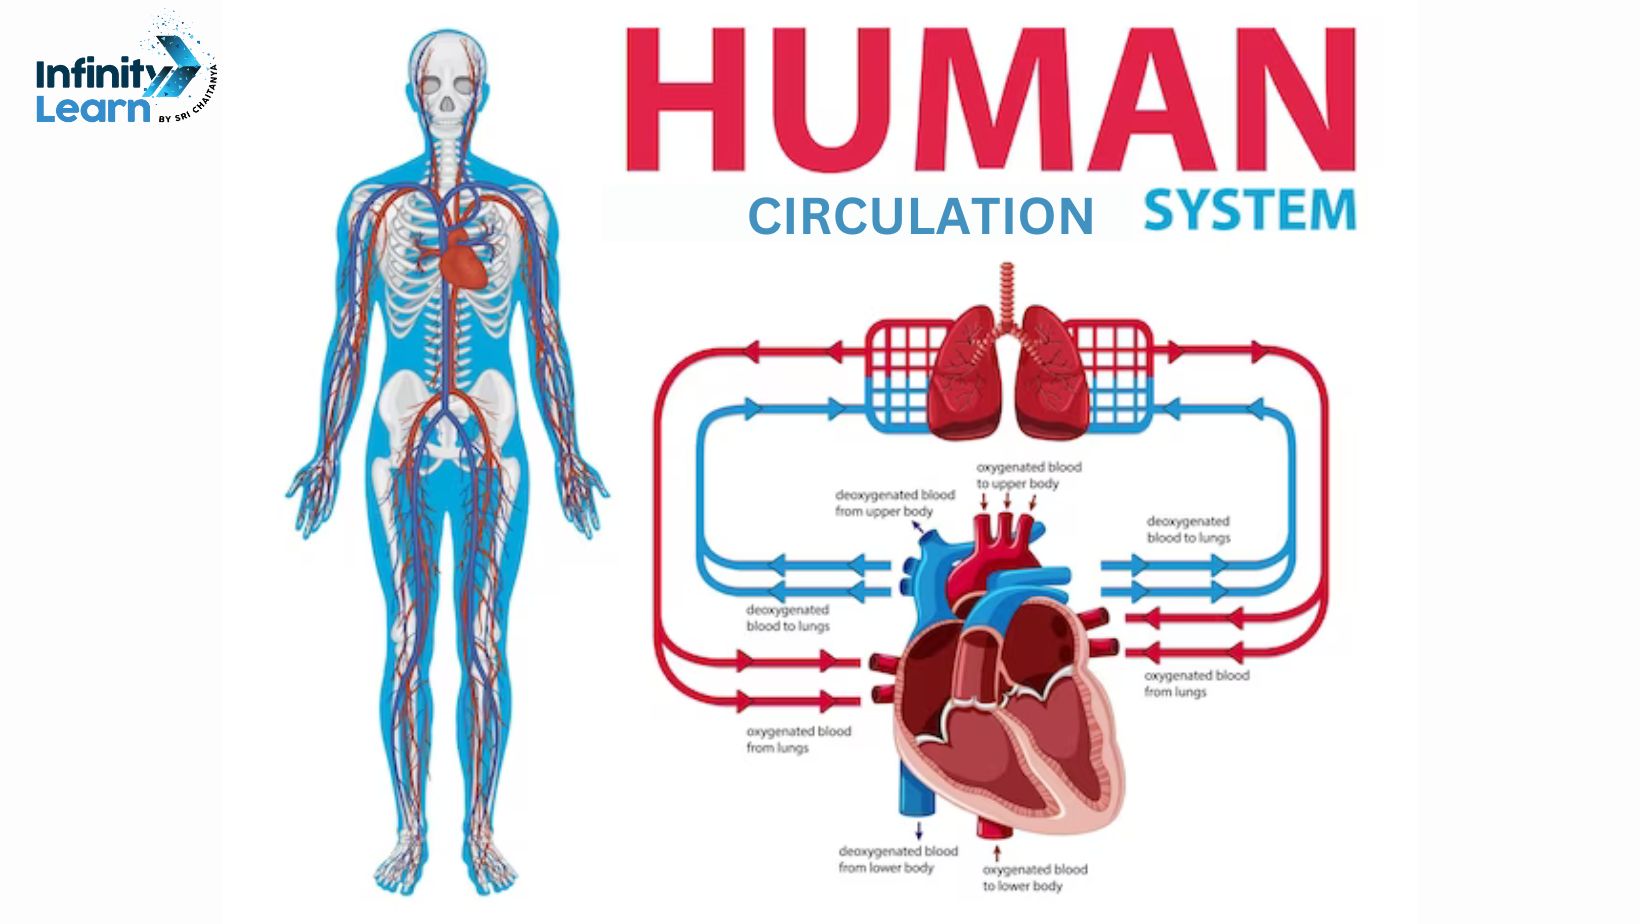 Human Circulation System